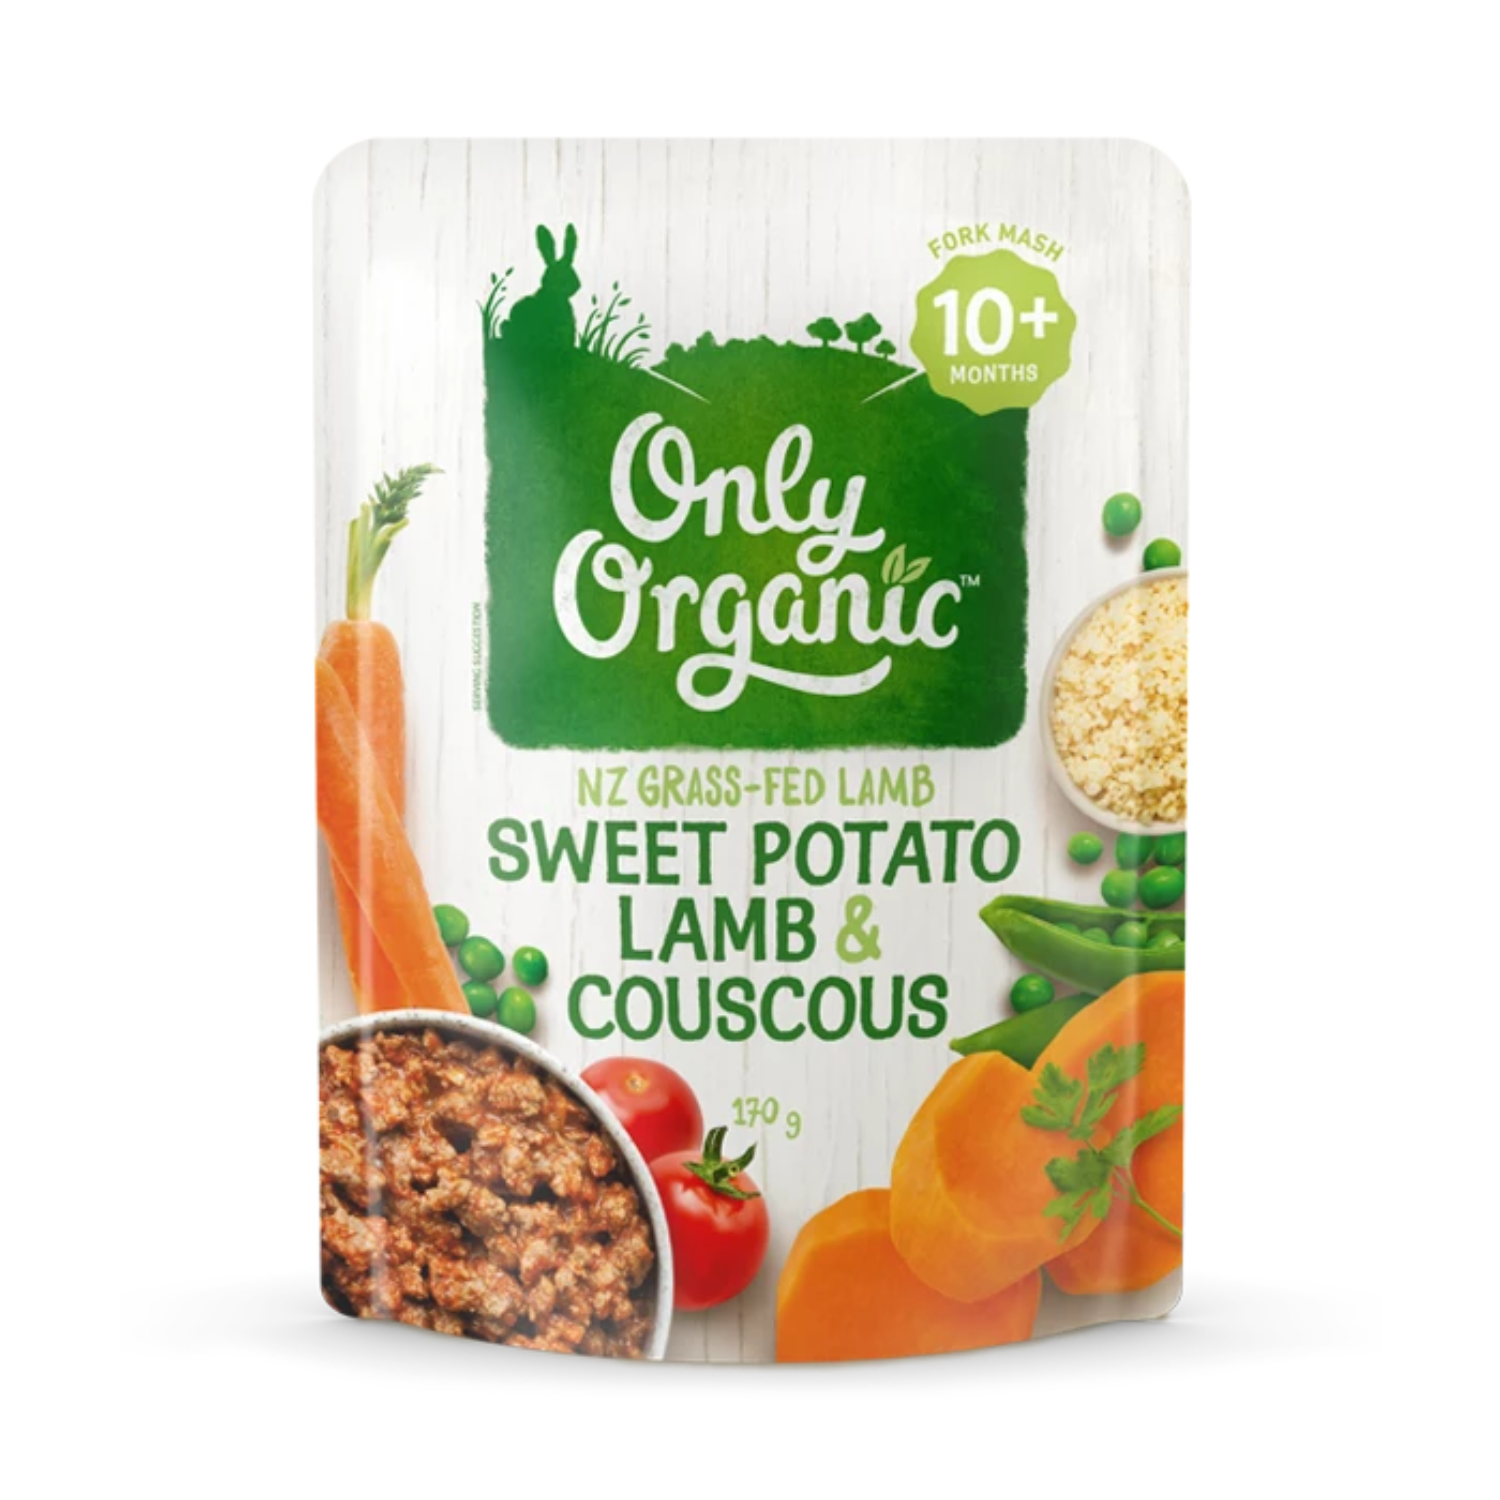 Only Organic Sweet Potato Lamb & Couscous, 170g (10+ months)